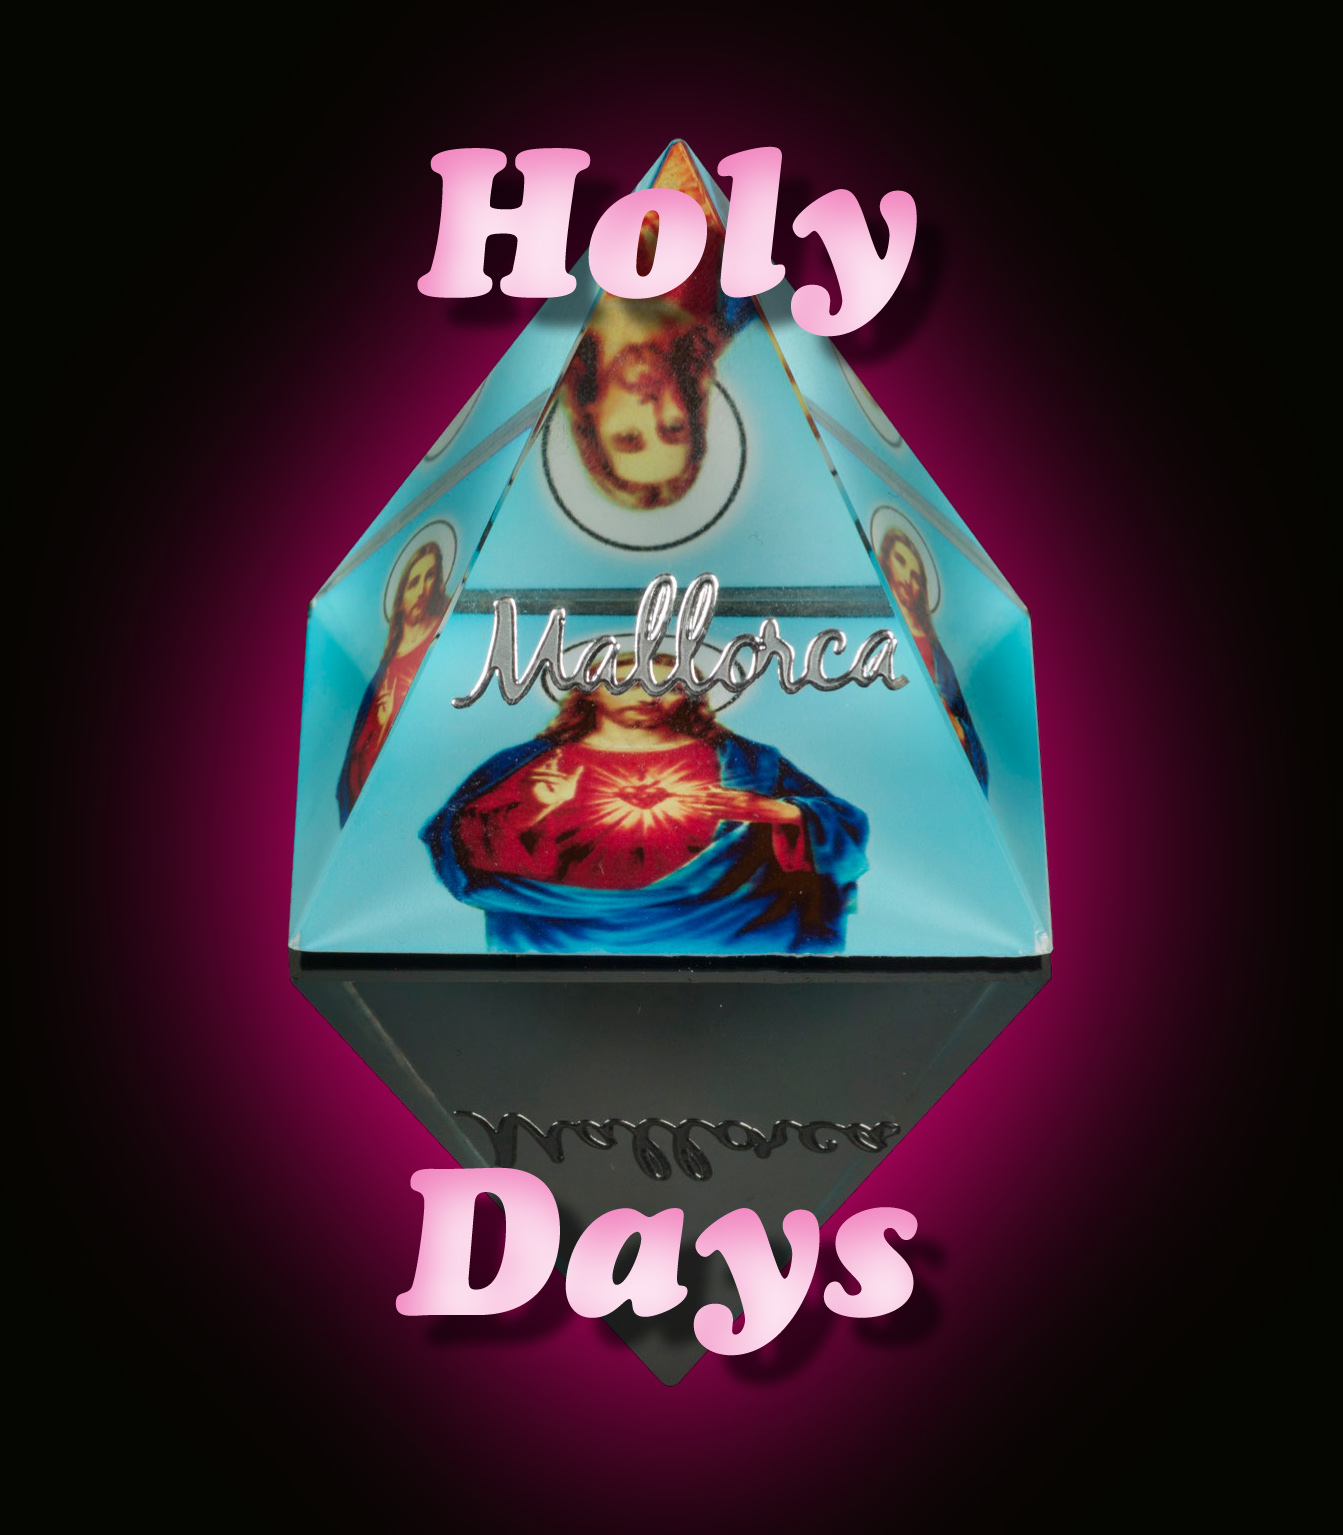 Holy Days - Toni Amengual